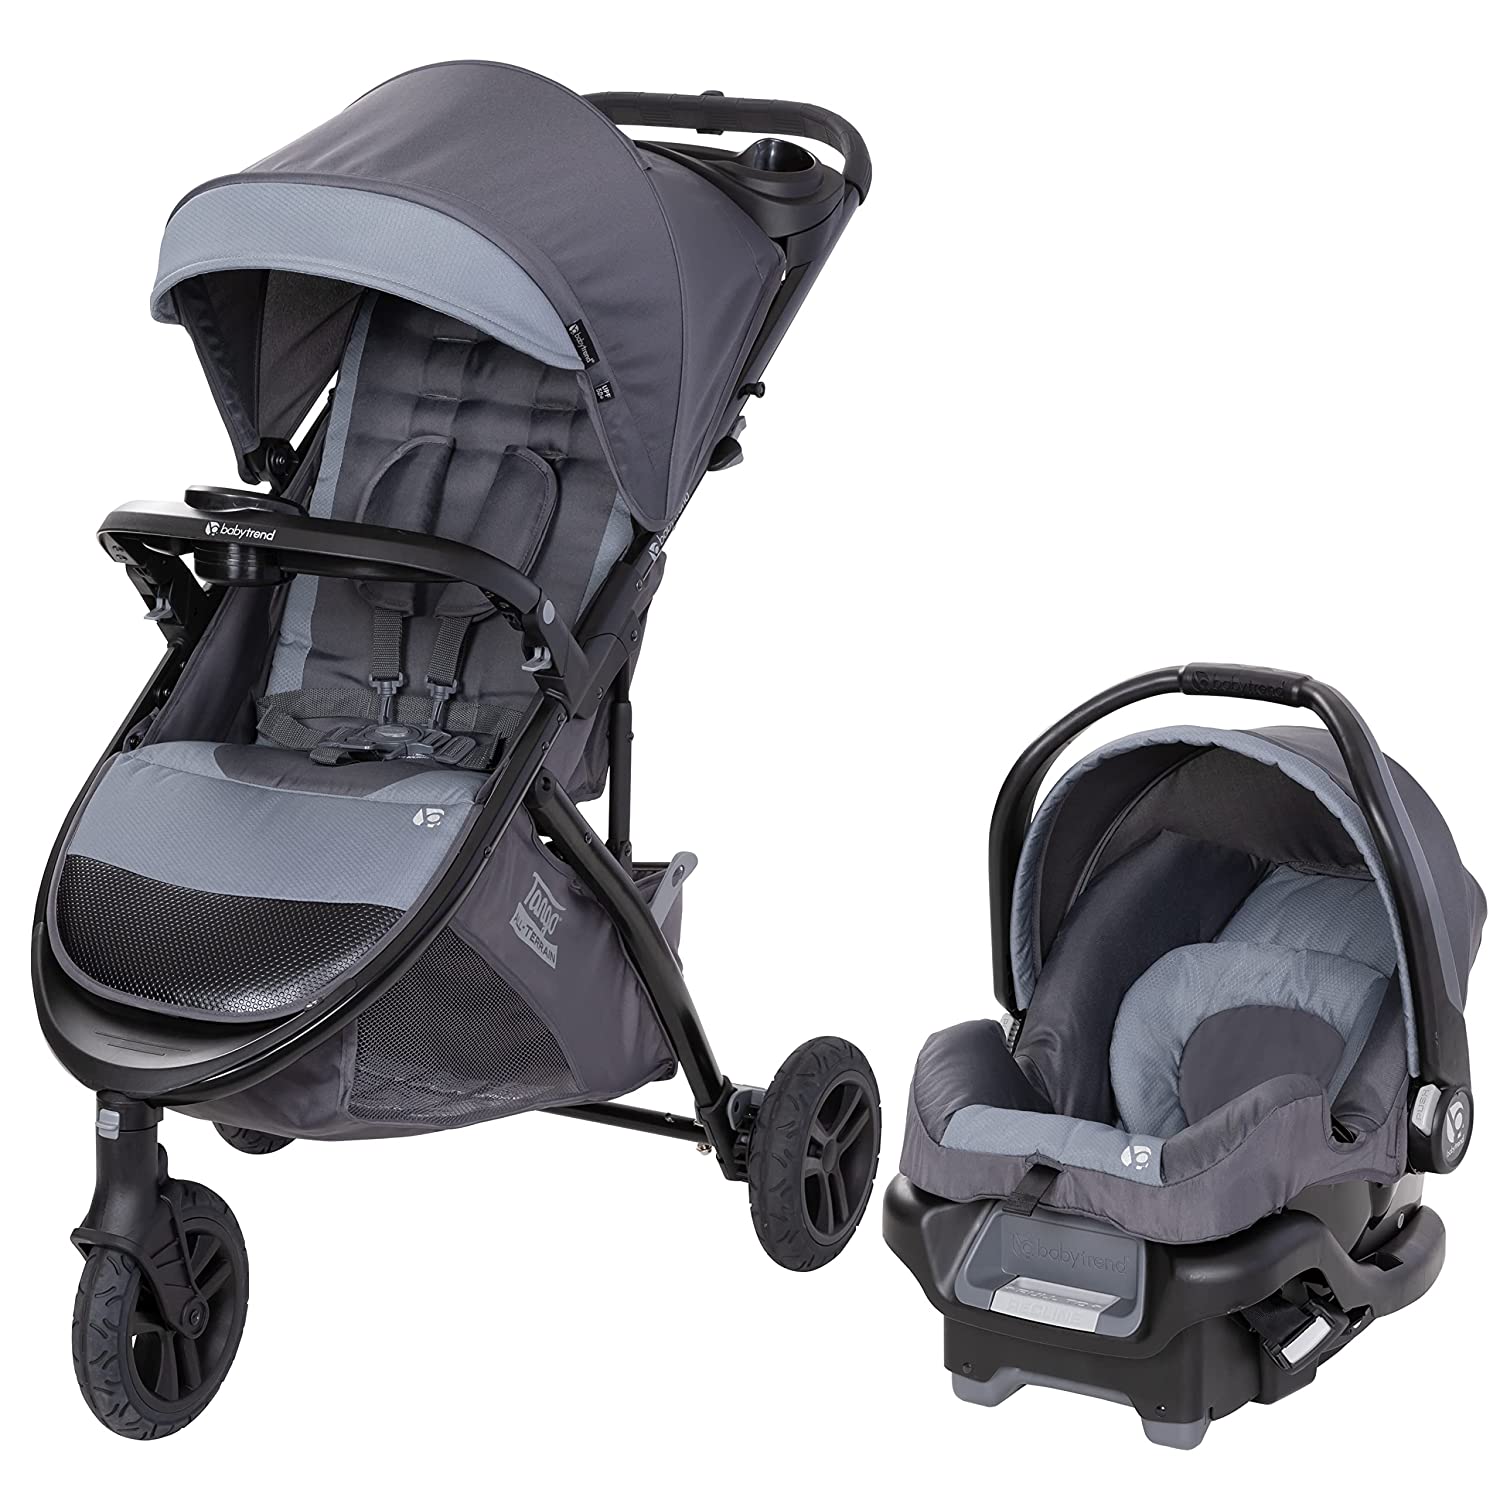 Детская коляска + автокресло Baby Trend Tango 3 All-Terrain, серый